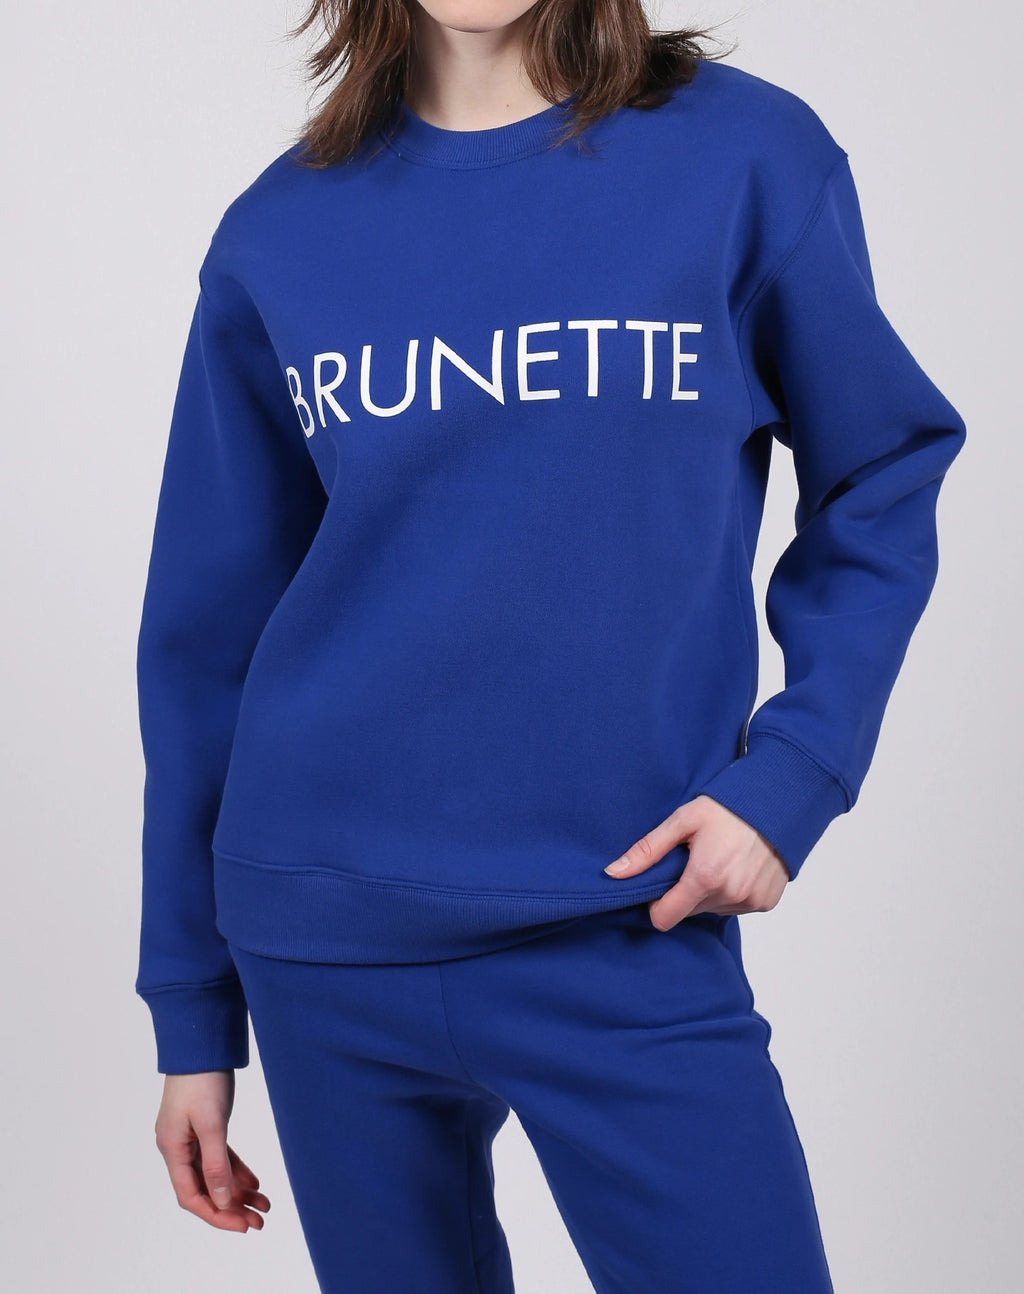 The "BRUNETTE” Classic Crew Neck Sweatshirt | Capri Blue